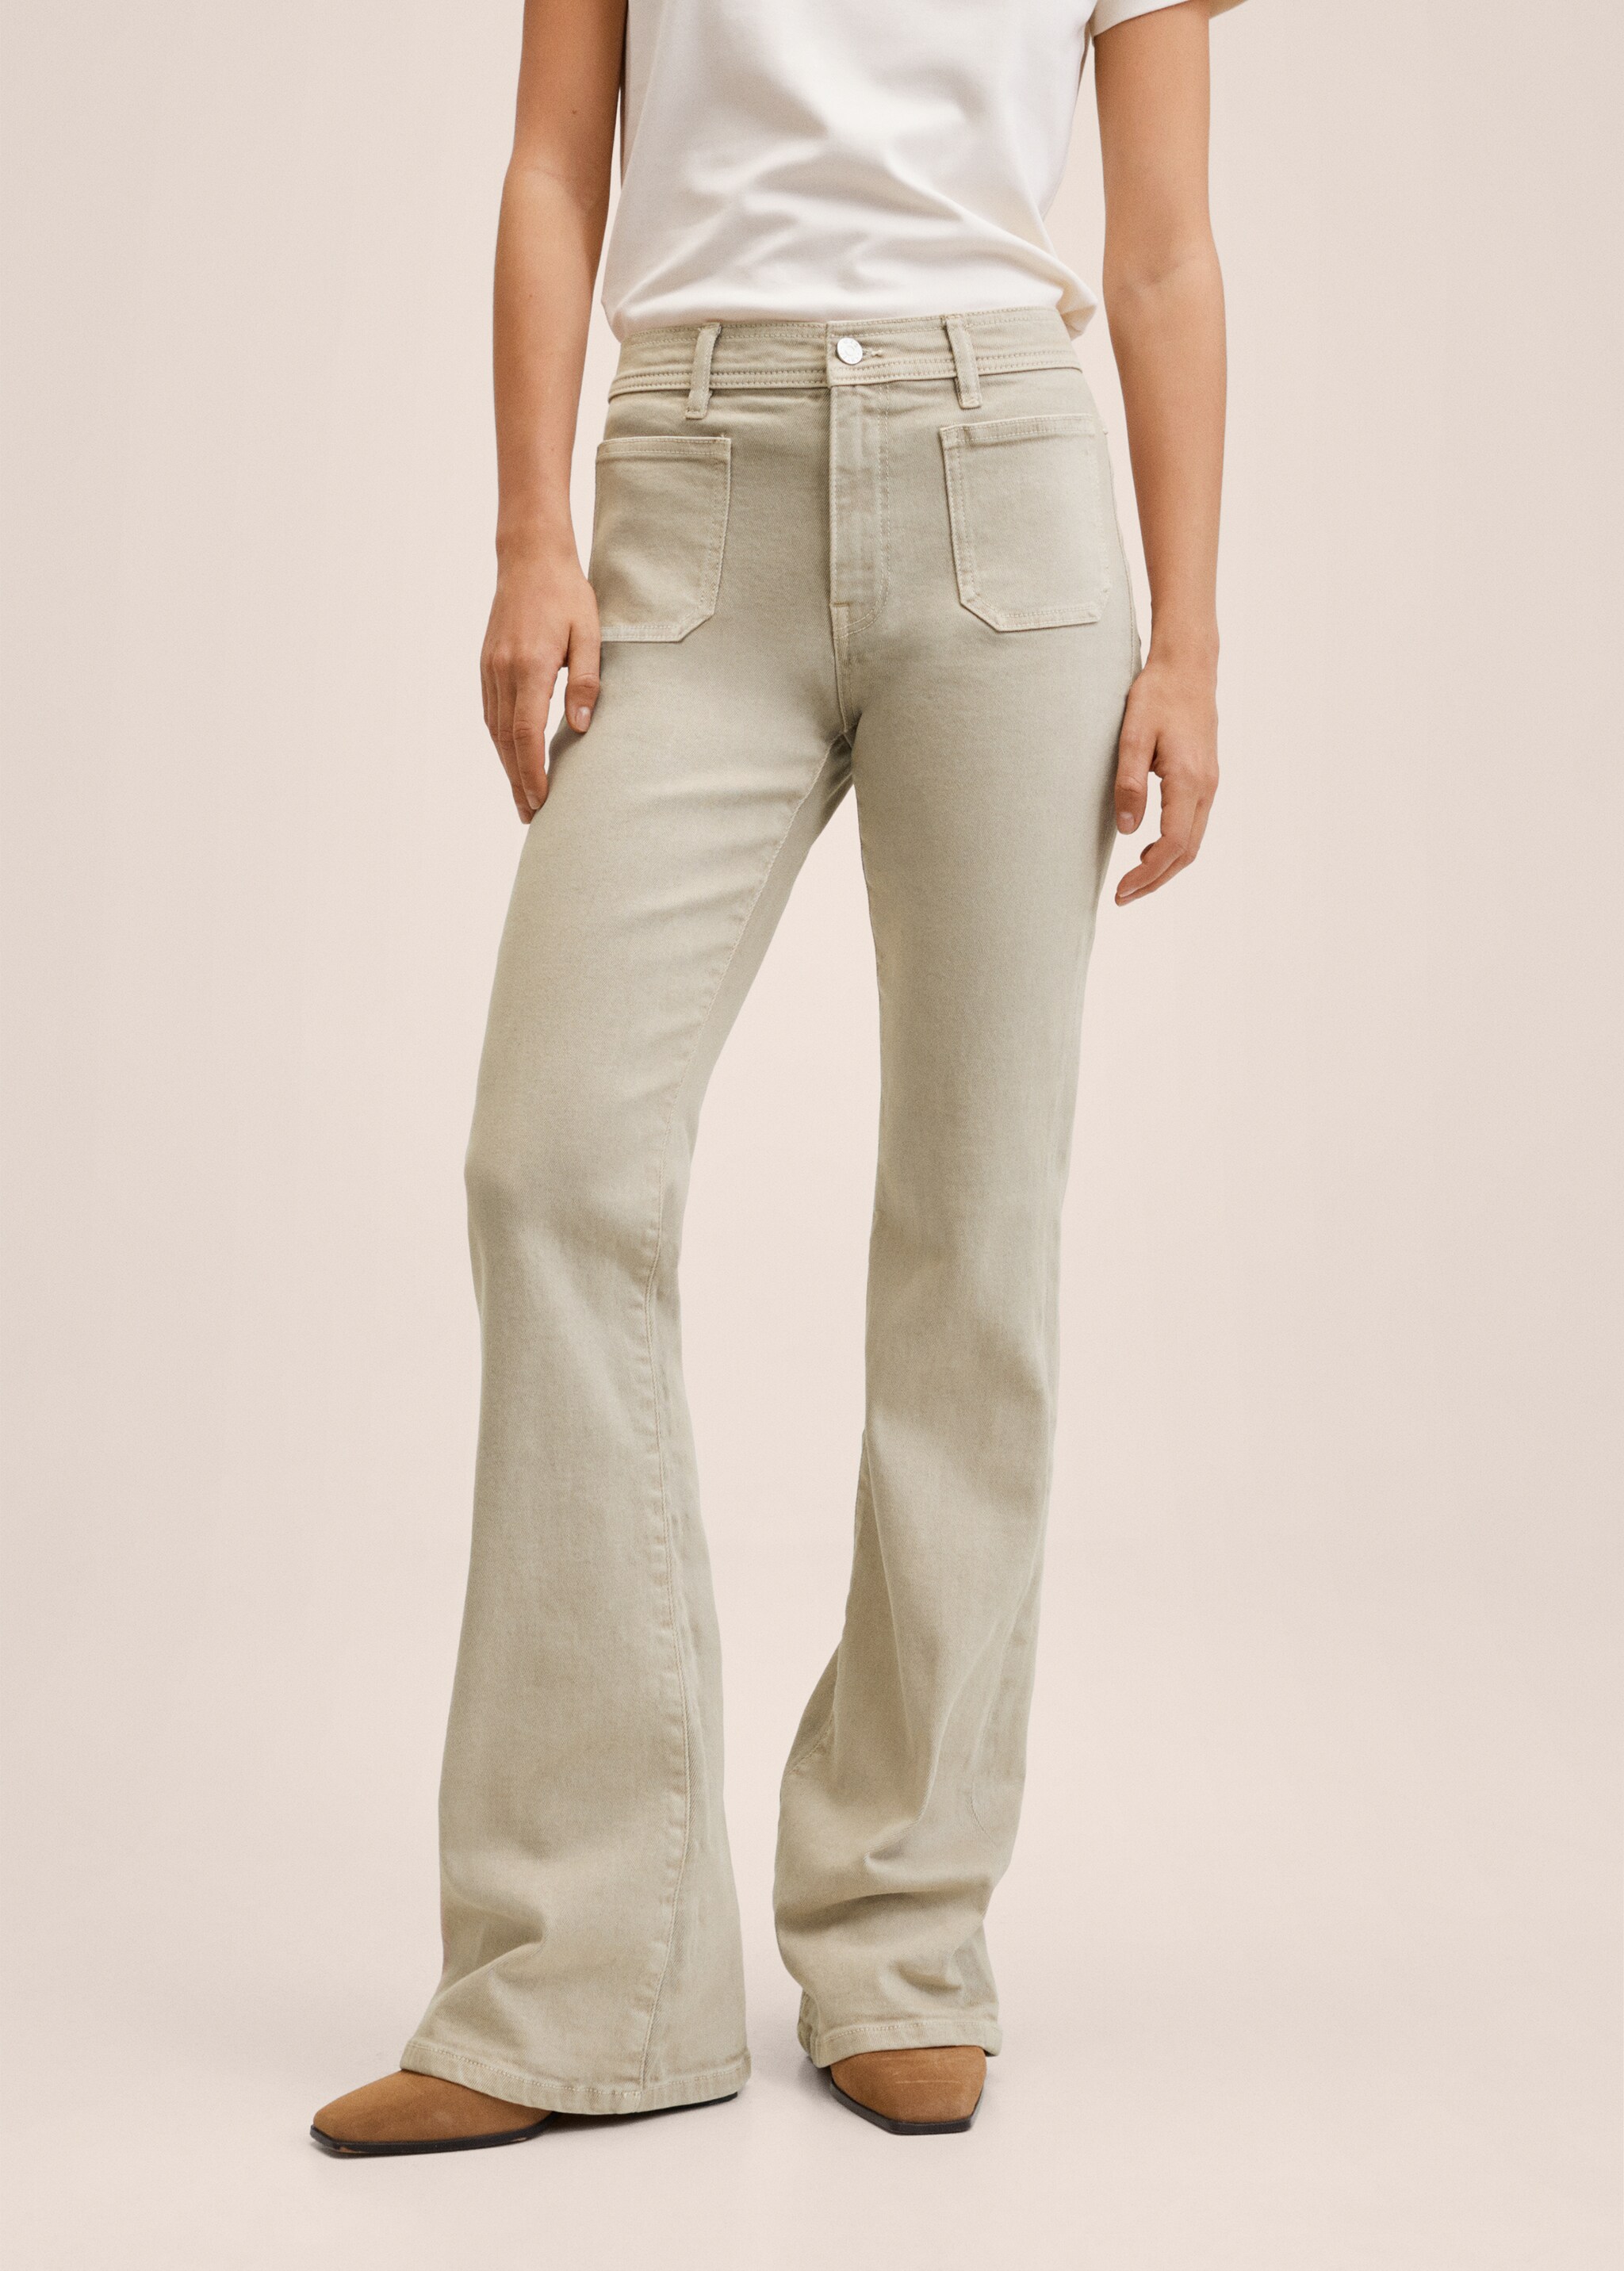 Flared jeans with pocket - Medium plane